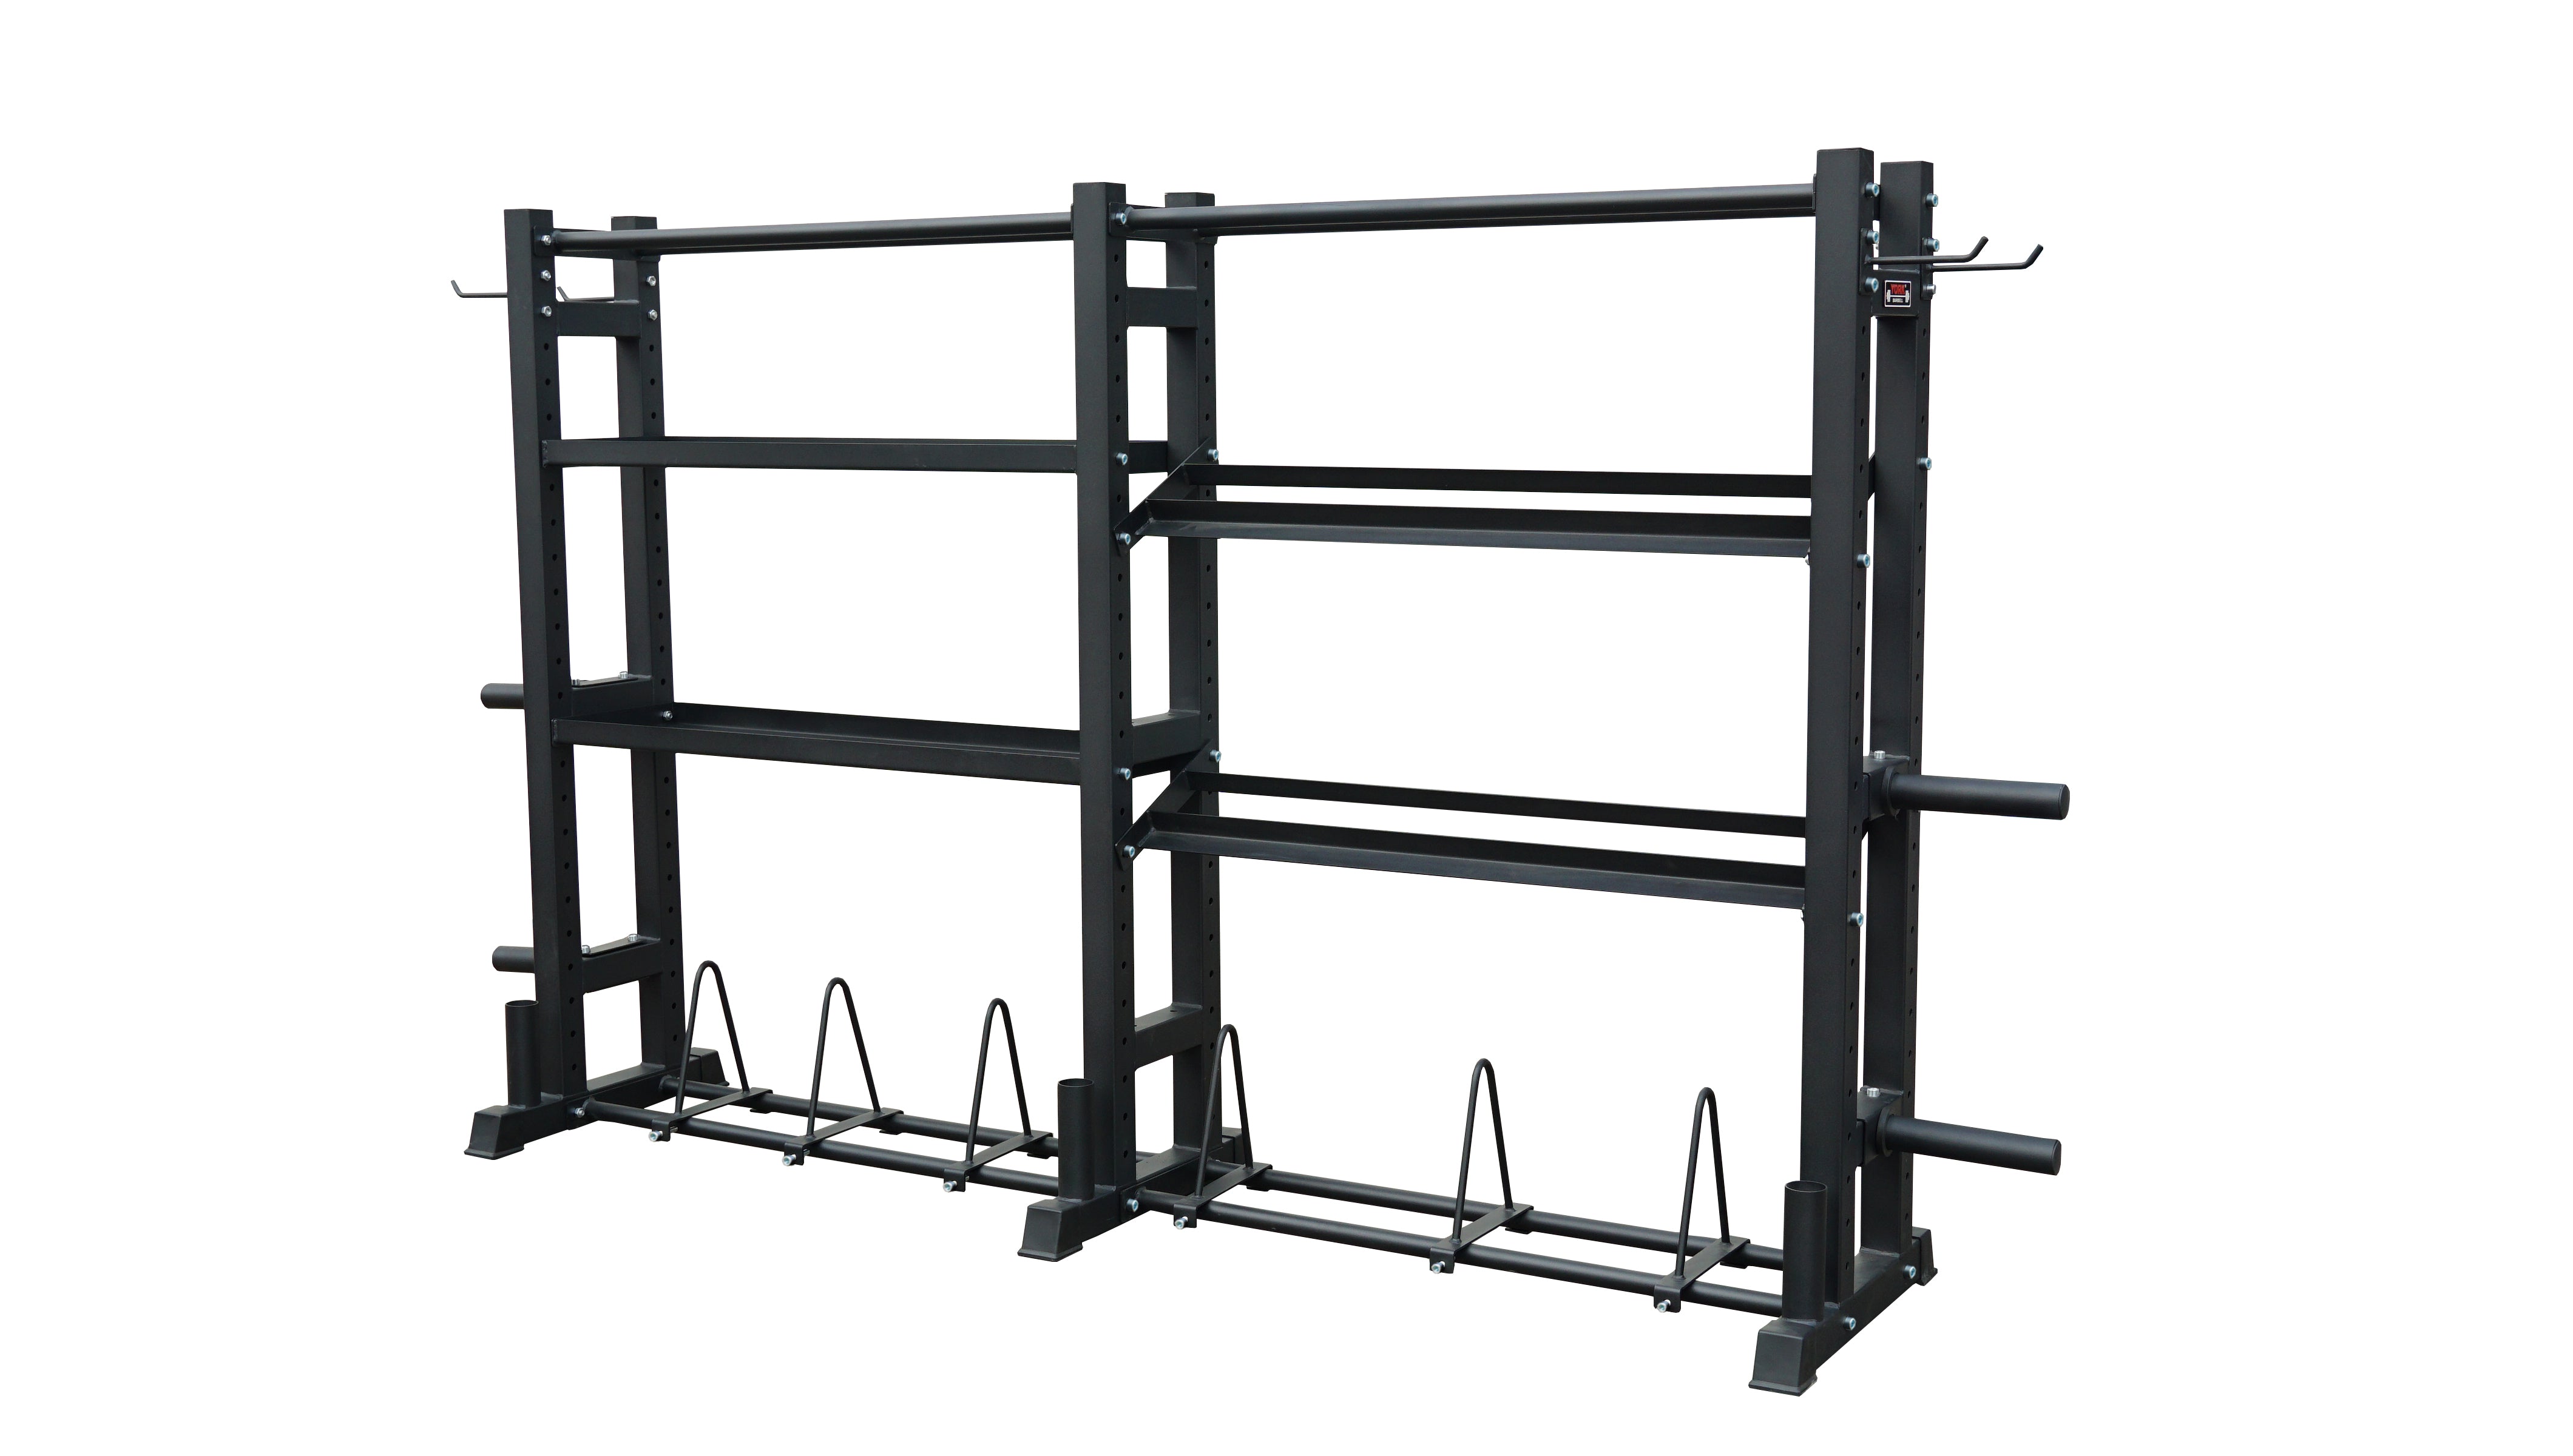 York Barbell 4-Tier Functional Weights & Bar Storage  - Black